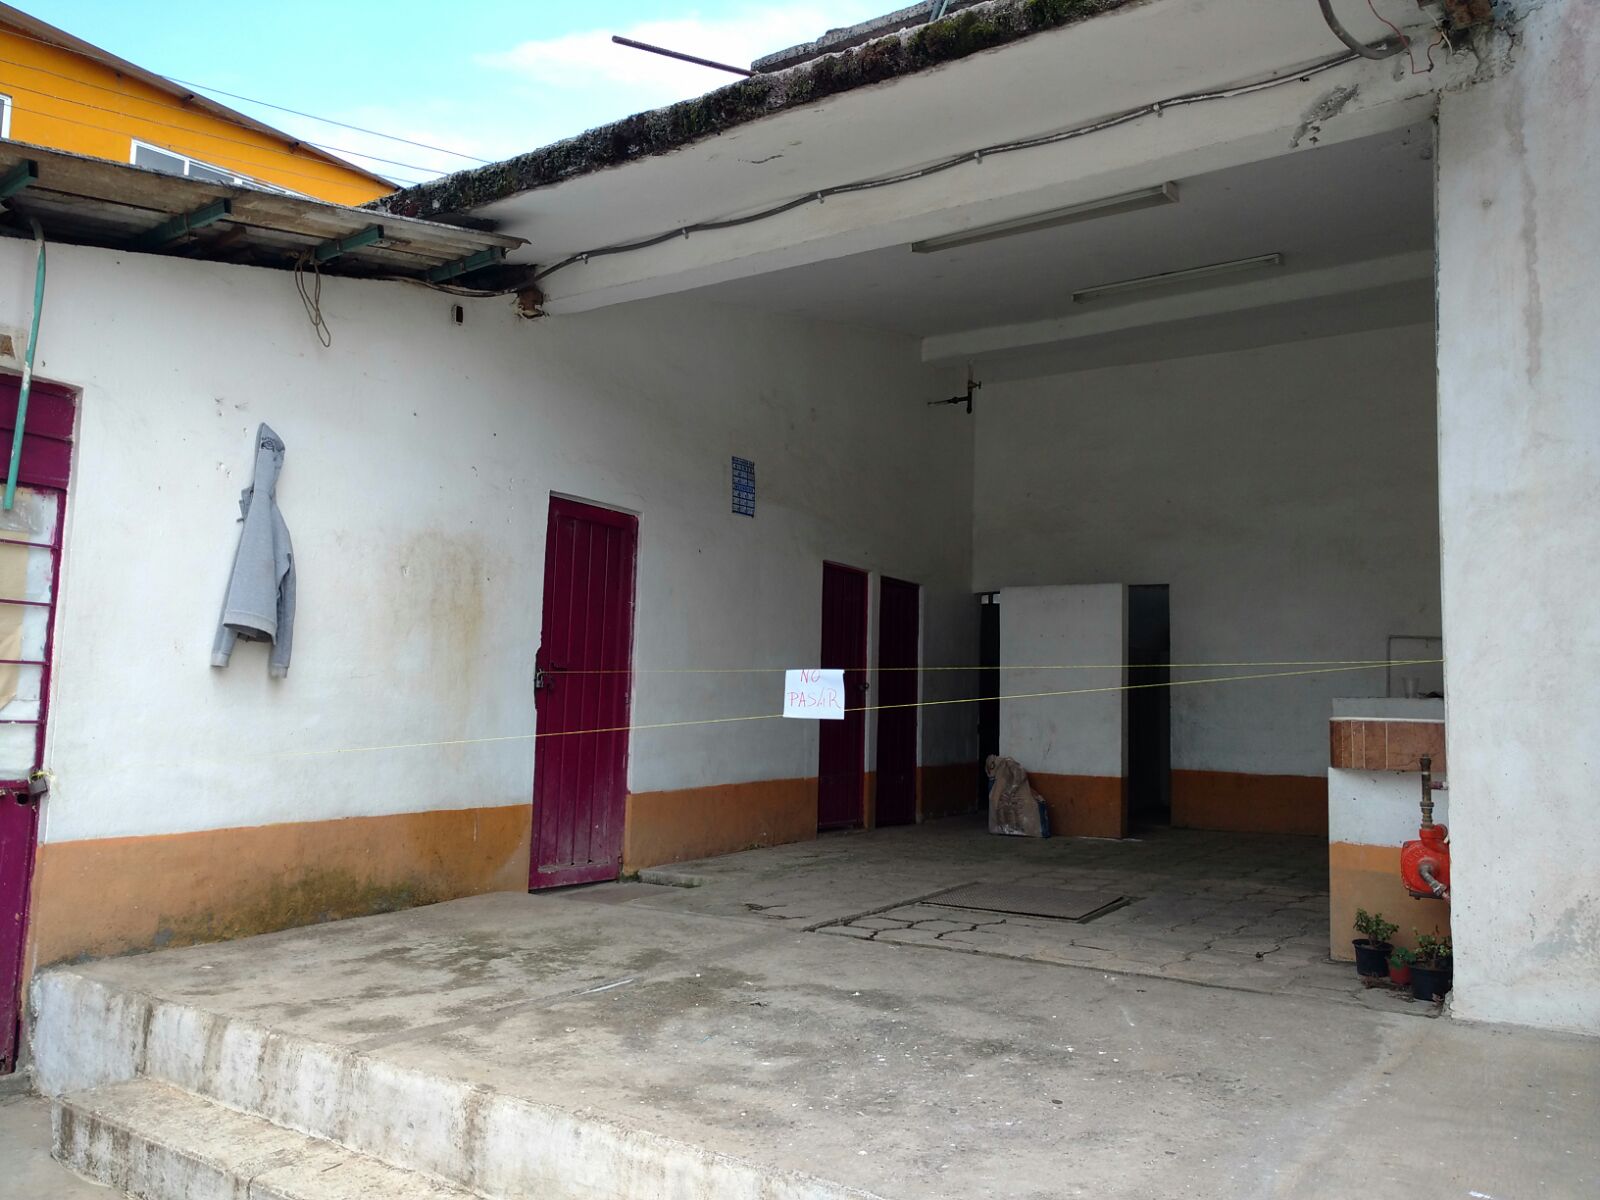 Drenaje tapado deja sin clases a 400 alumnos en Huauchinango